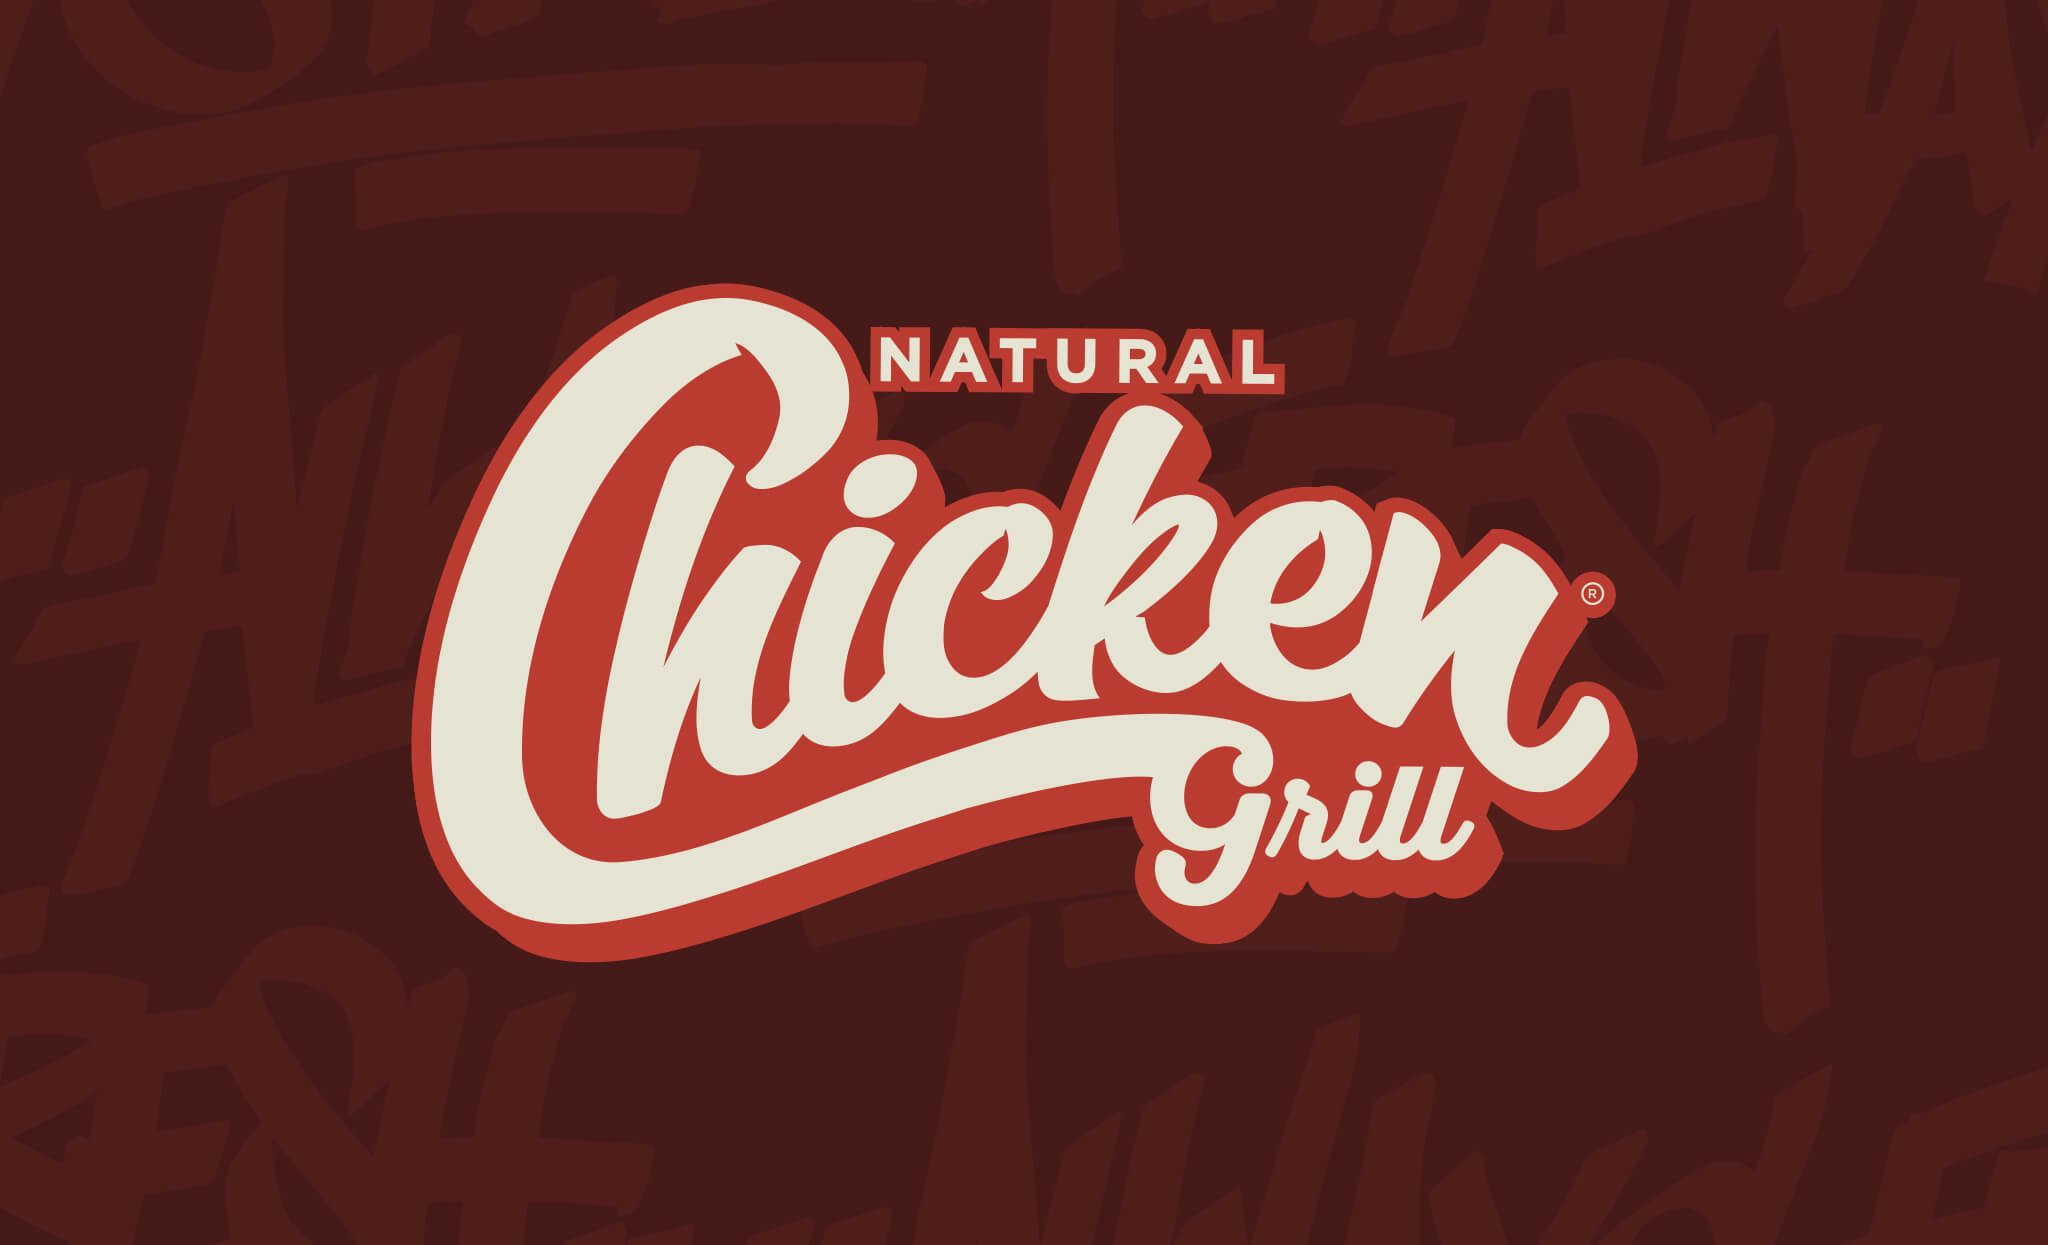 deep-sleep-studio-natural-chicken-grill-logo-